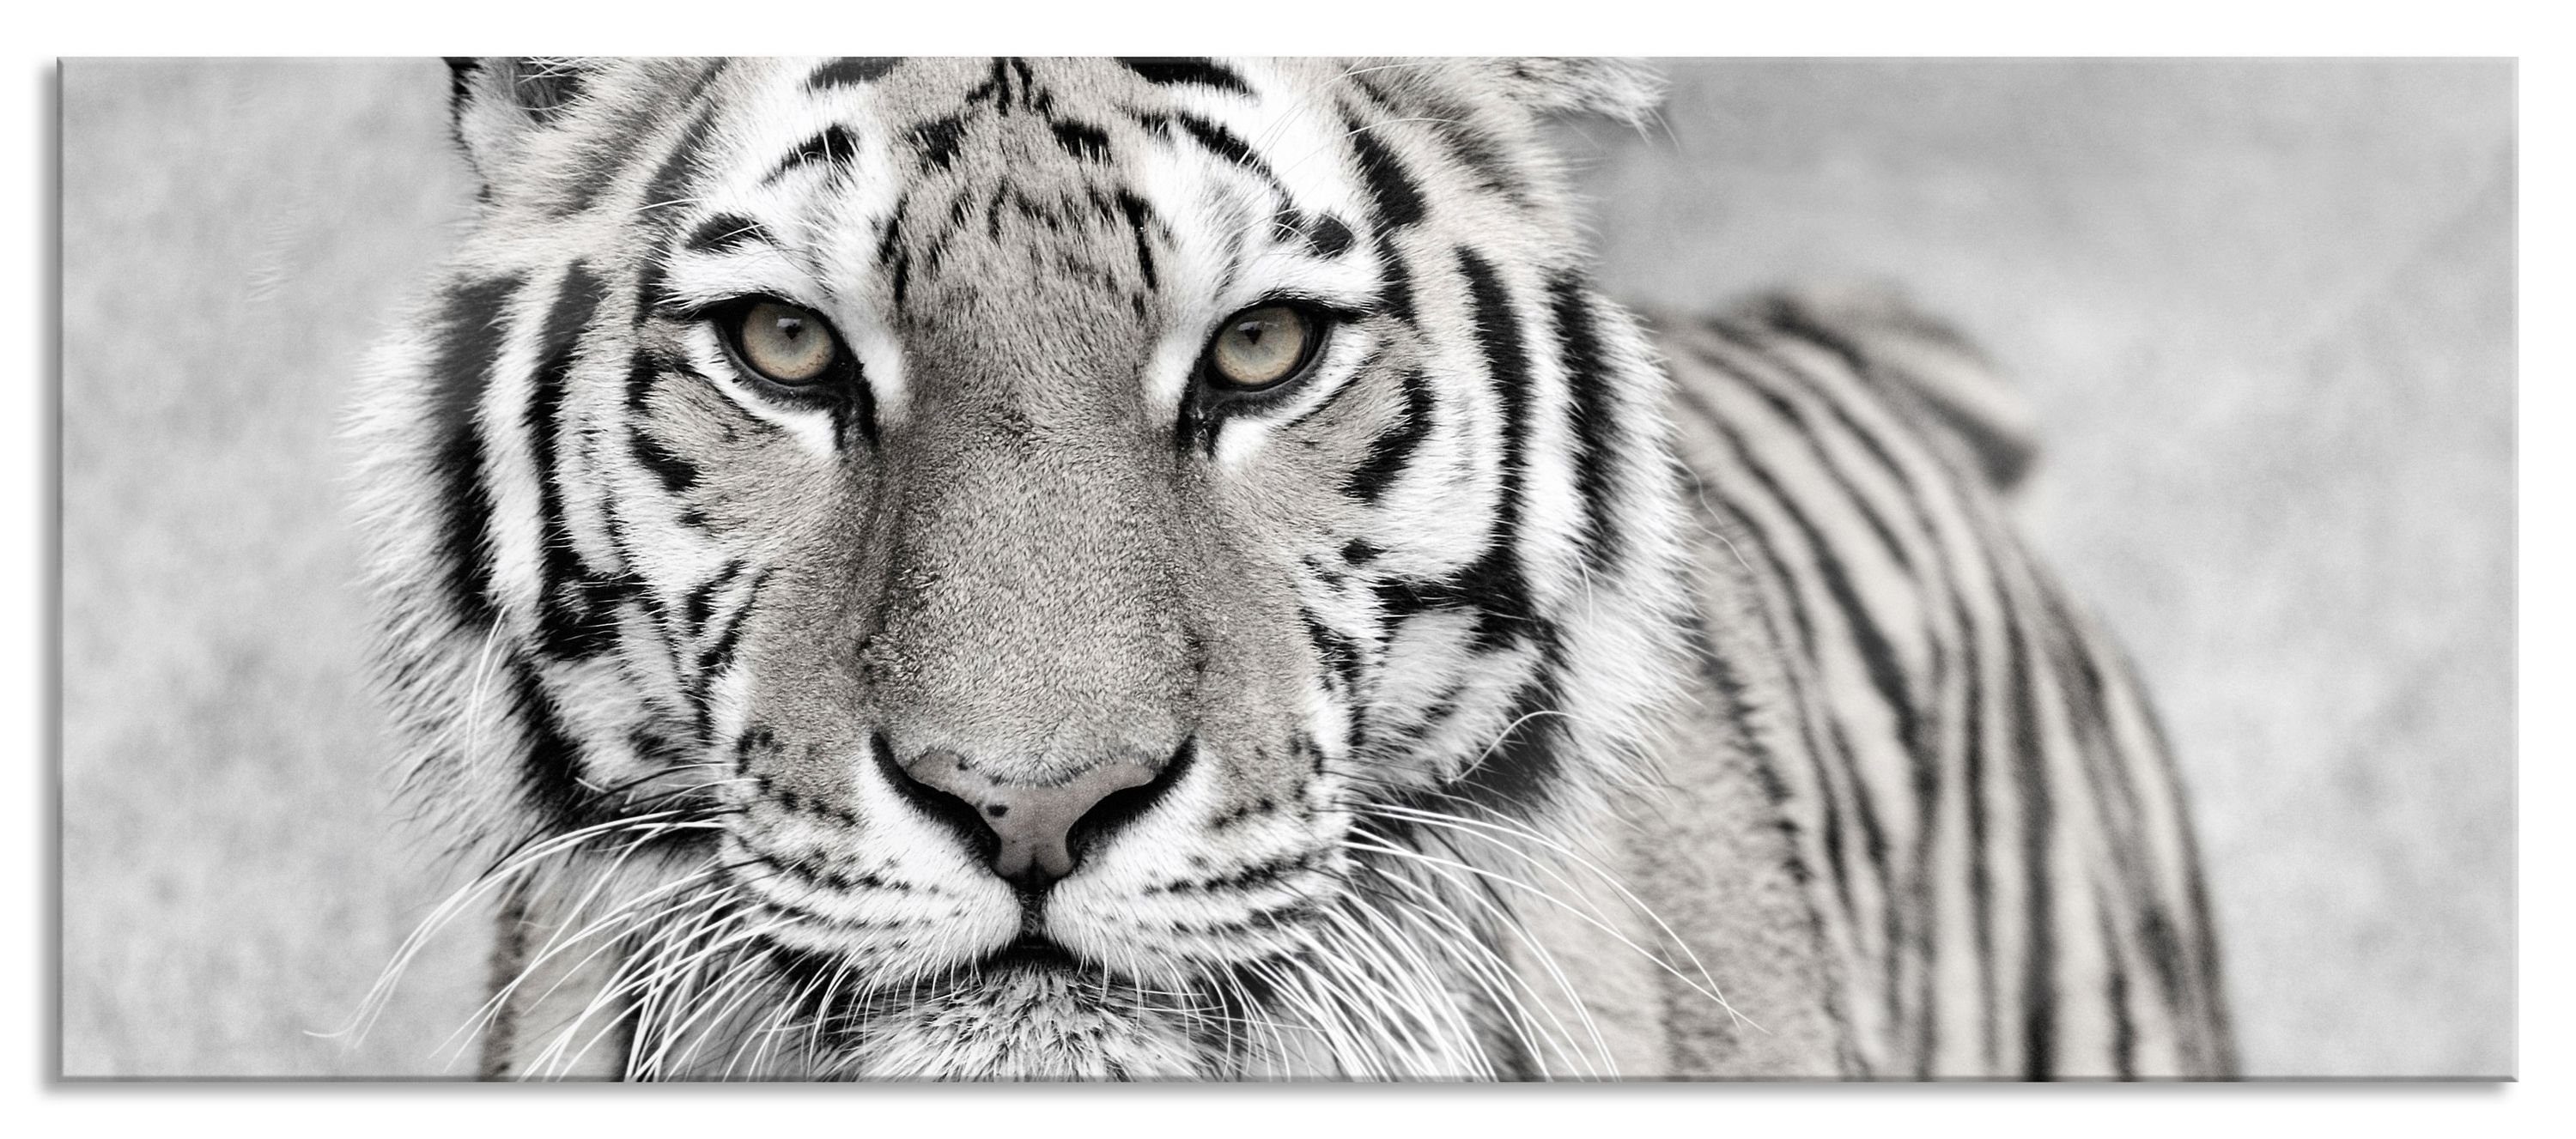 Anmutiger Glasbild aus in, Anmutiger Glasbild Aufhängungen Echtglas, St), Tiger in inkl. und Abstandshalter Tiger (1 Pixxprint